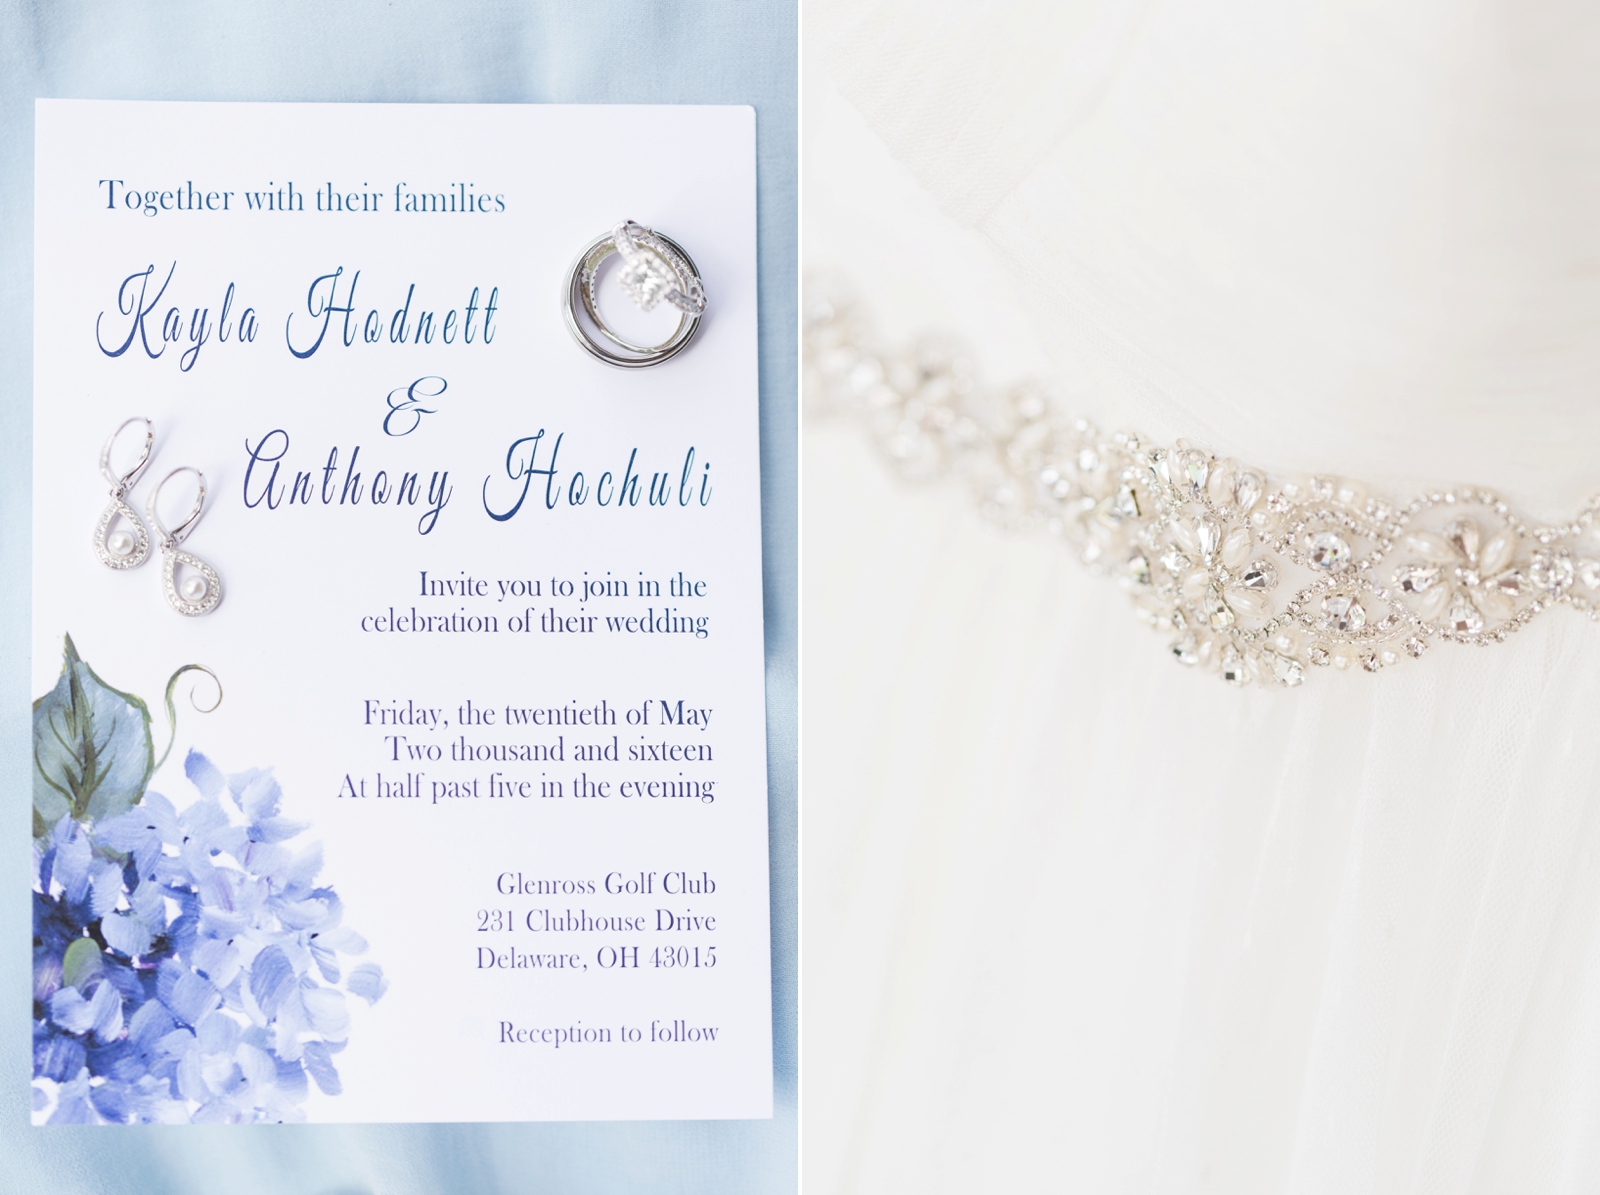 rings-on-a-wedding-invitation